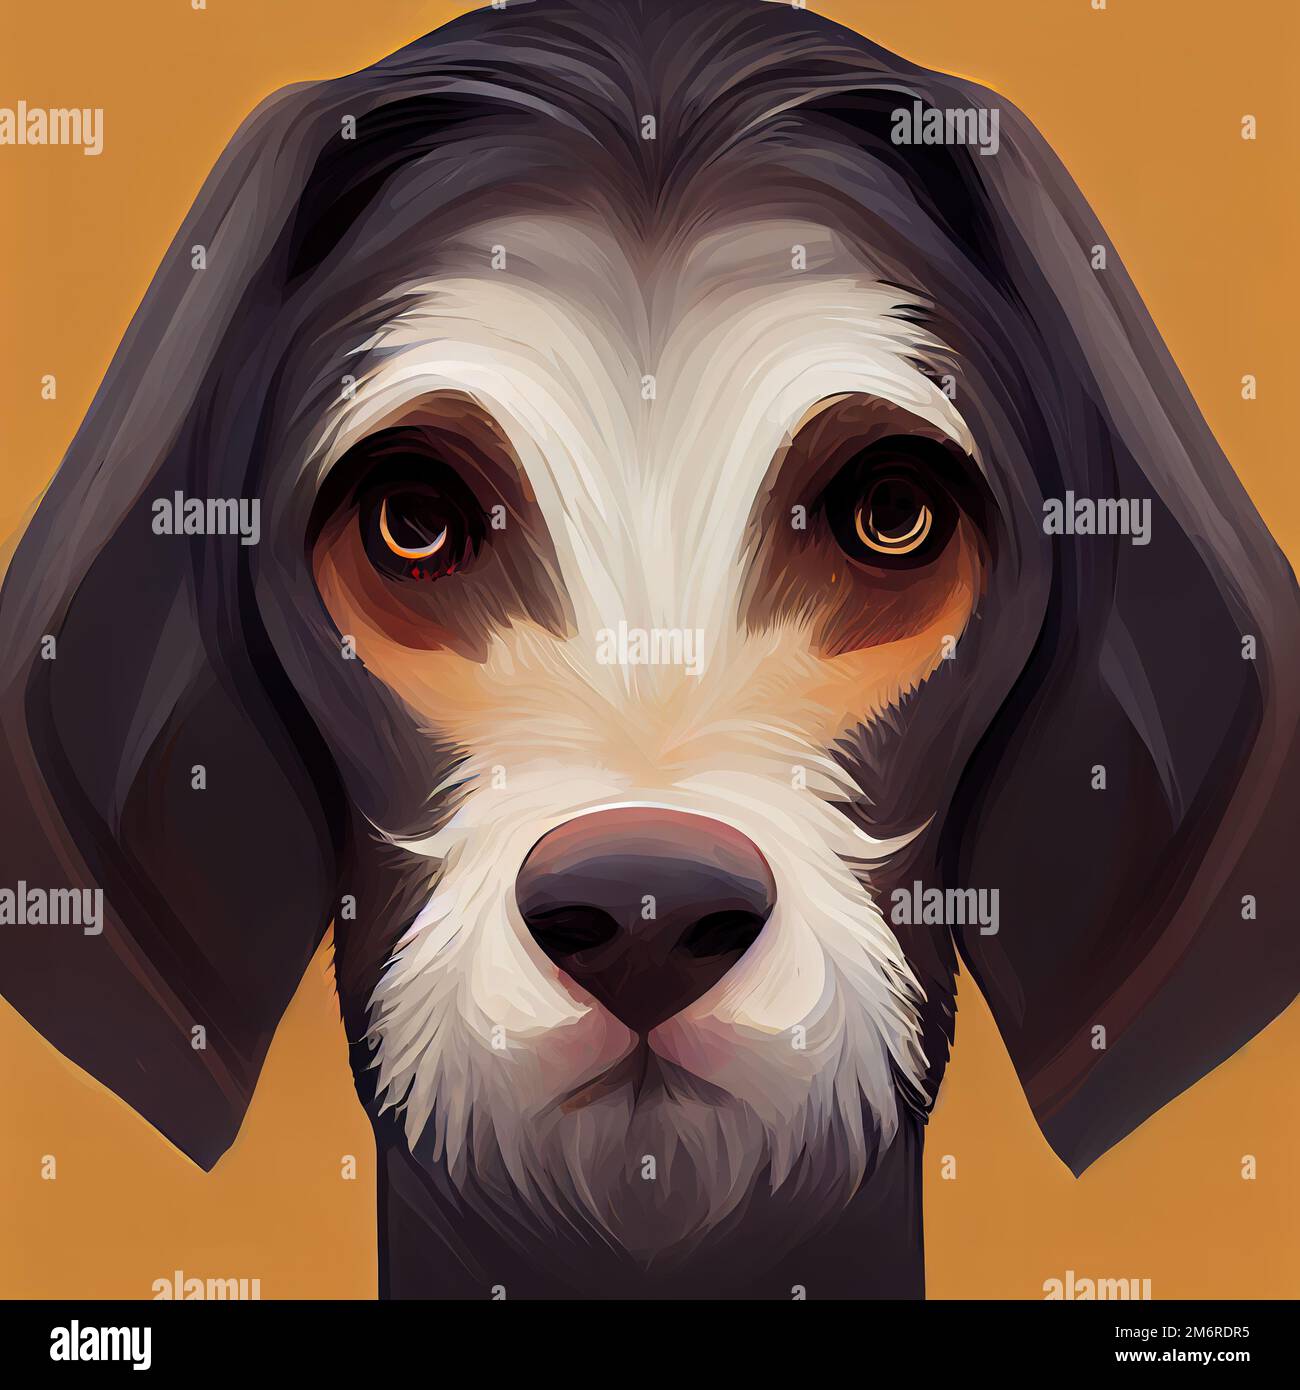 Close-up digital portrait of a dog. Digital illustration based on render by neural network Stock Photo